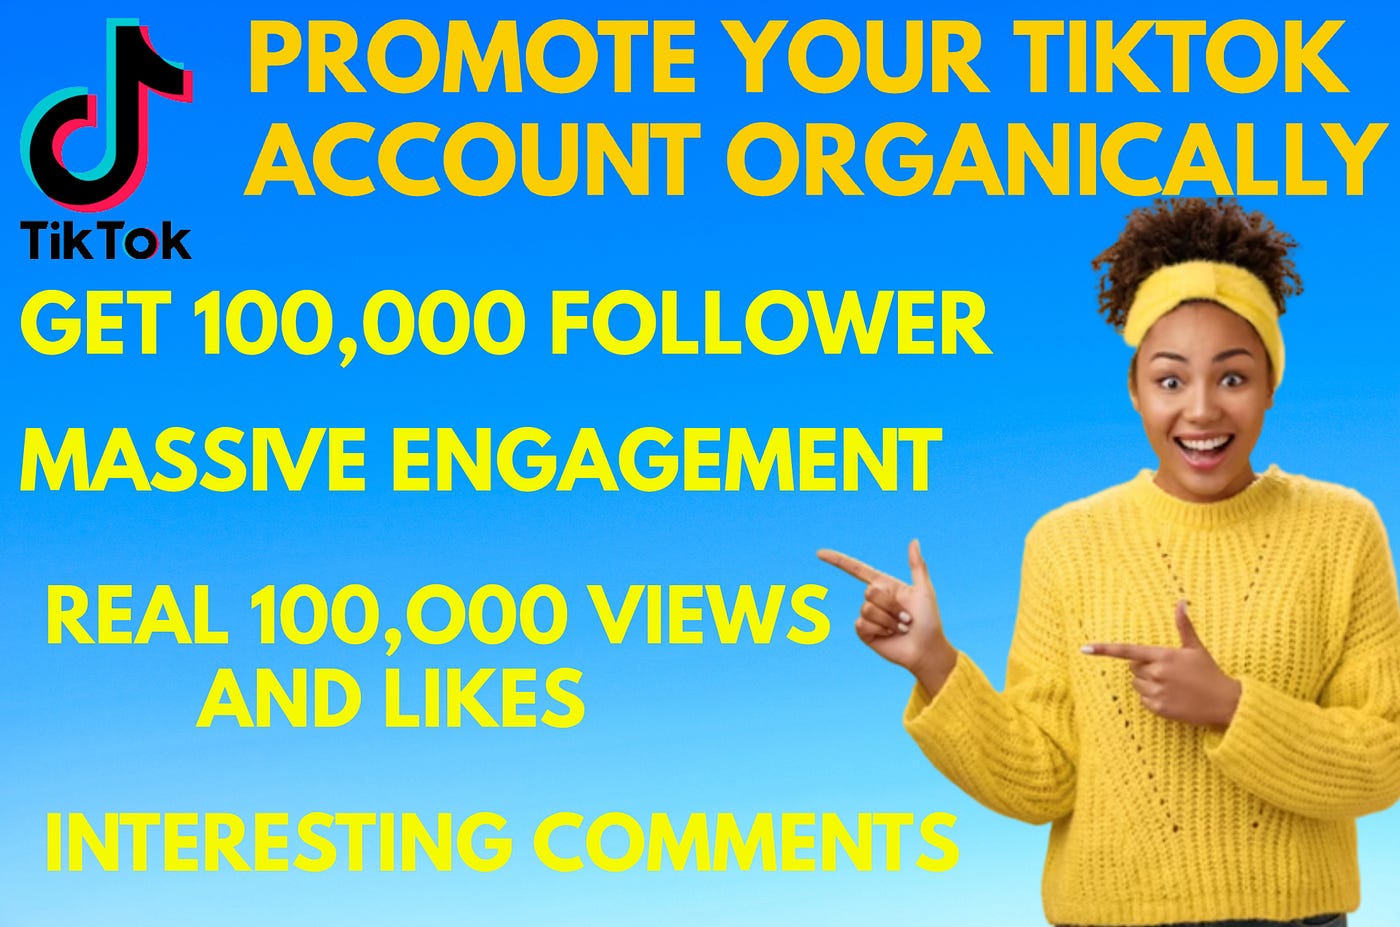 How to Increase TikTok Followers and Views Organically?